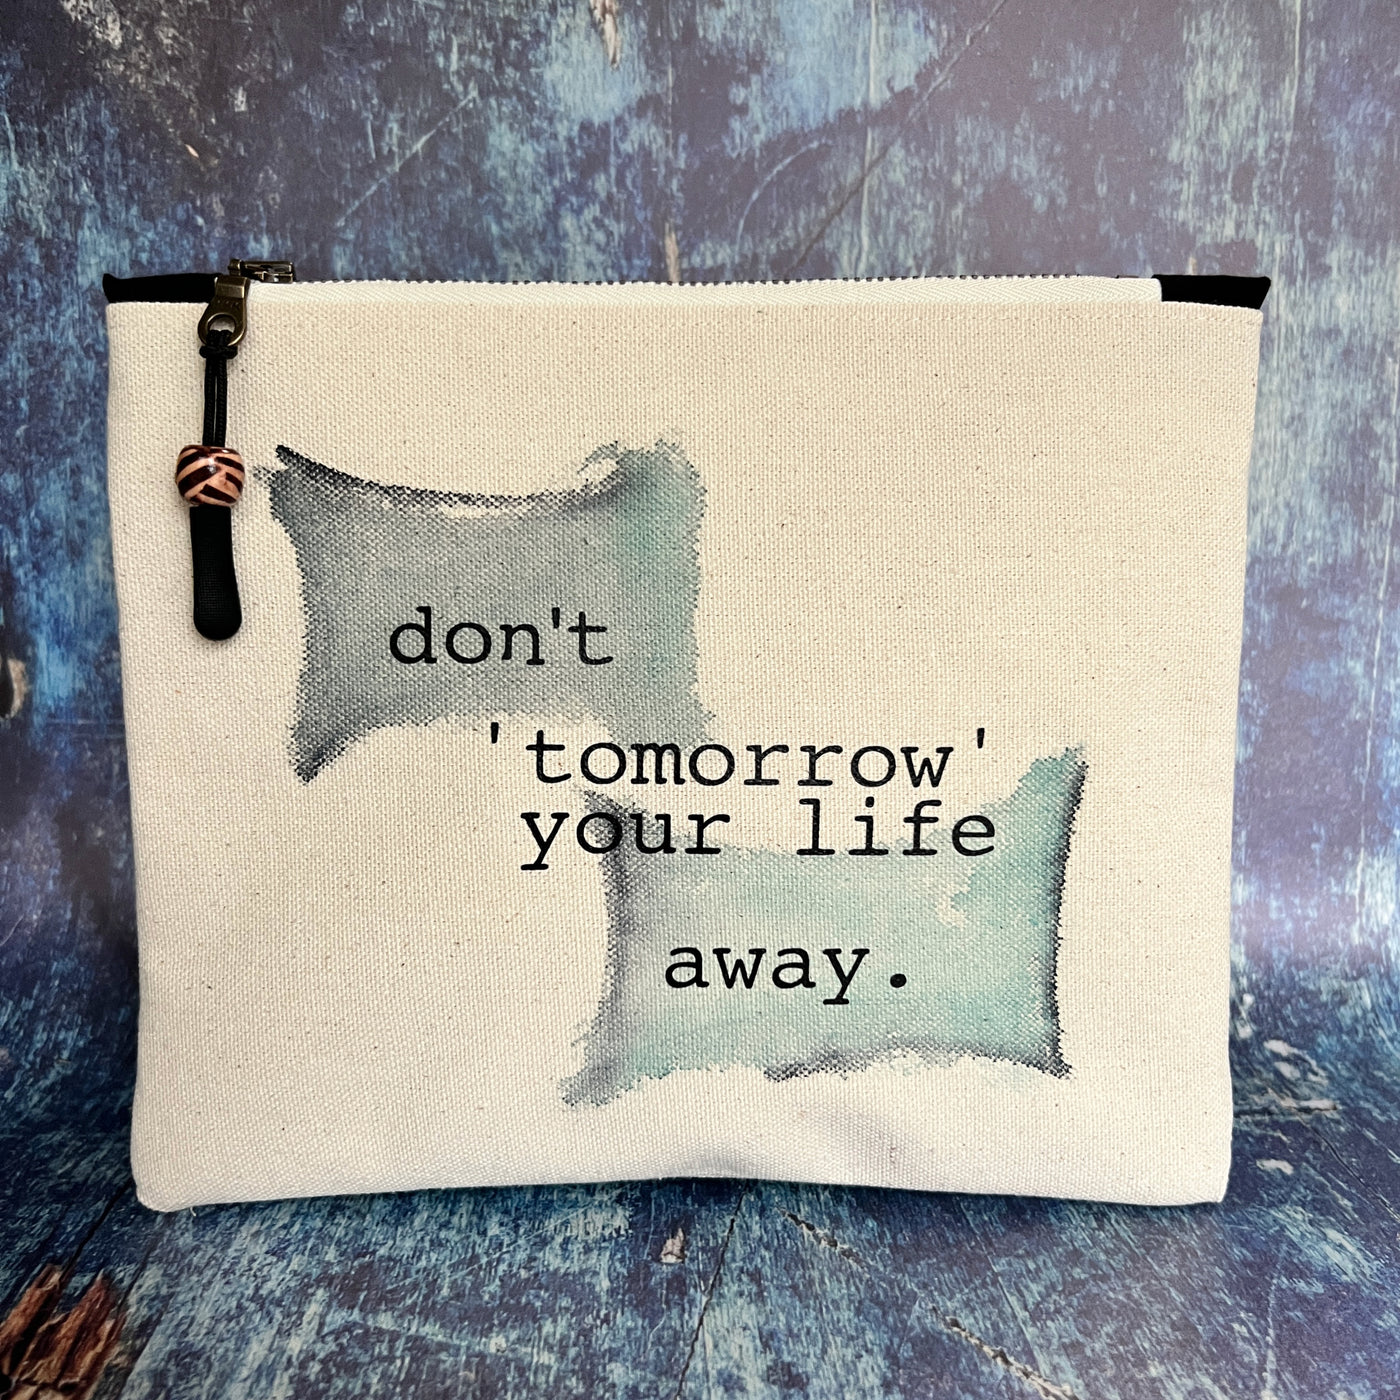 mini canvas zip bag - don't tomorrow your life away